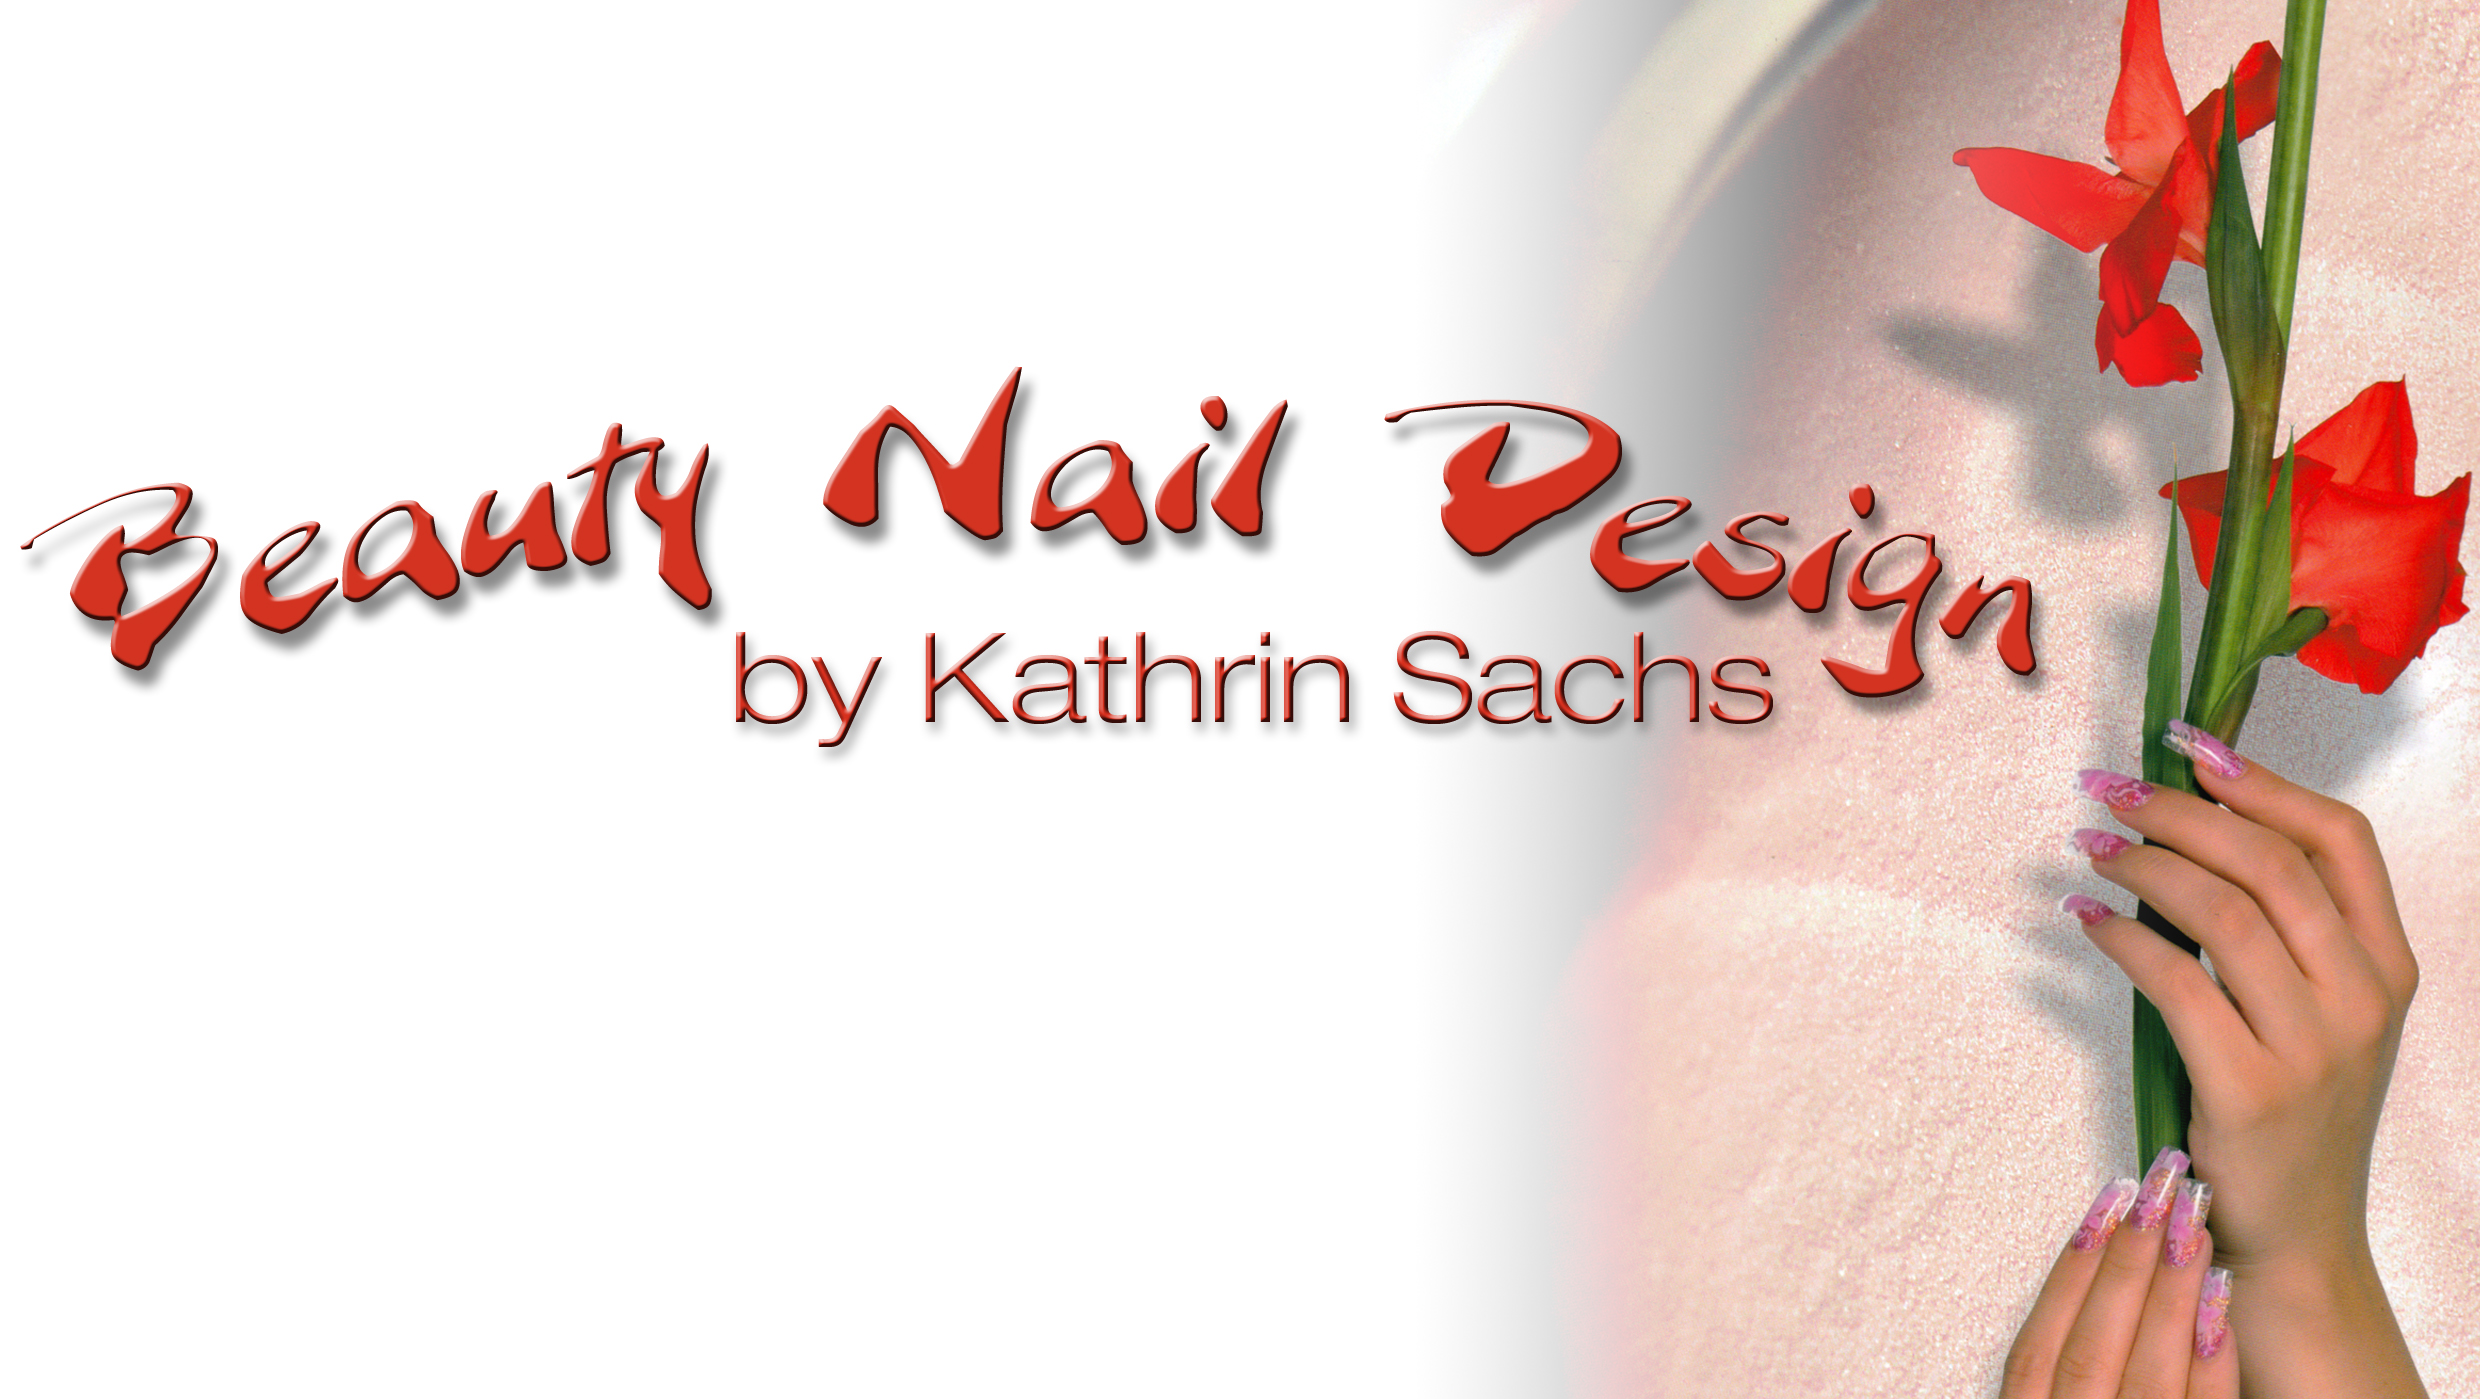 "Nail Design by Kathrin Sachs"